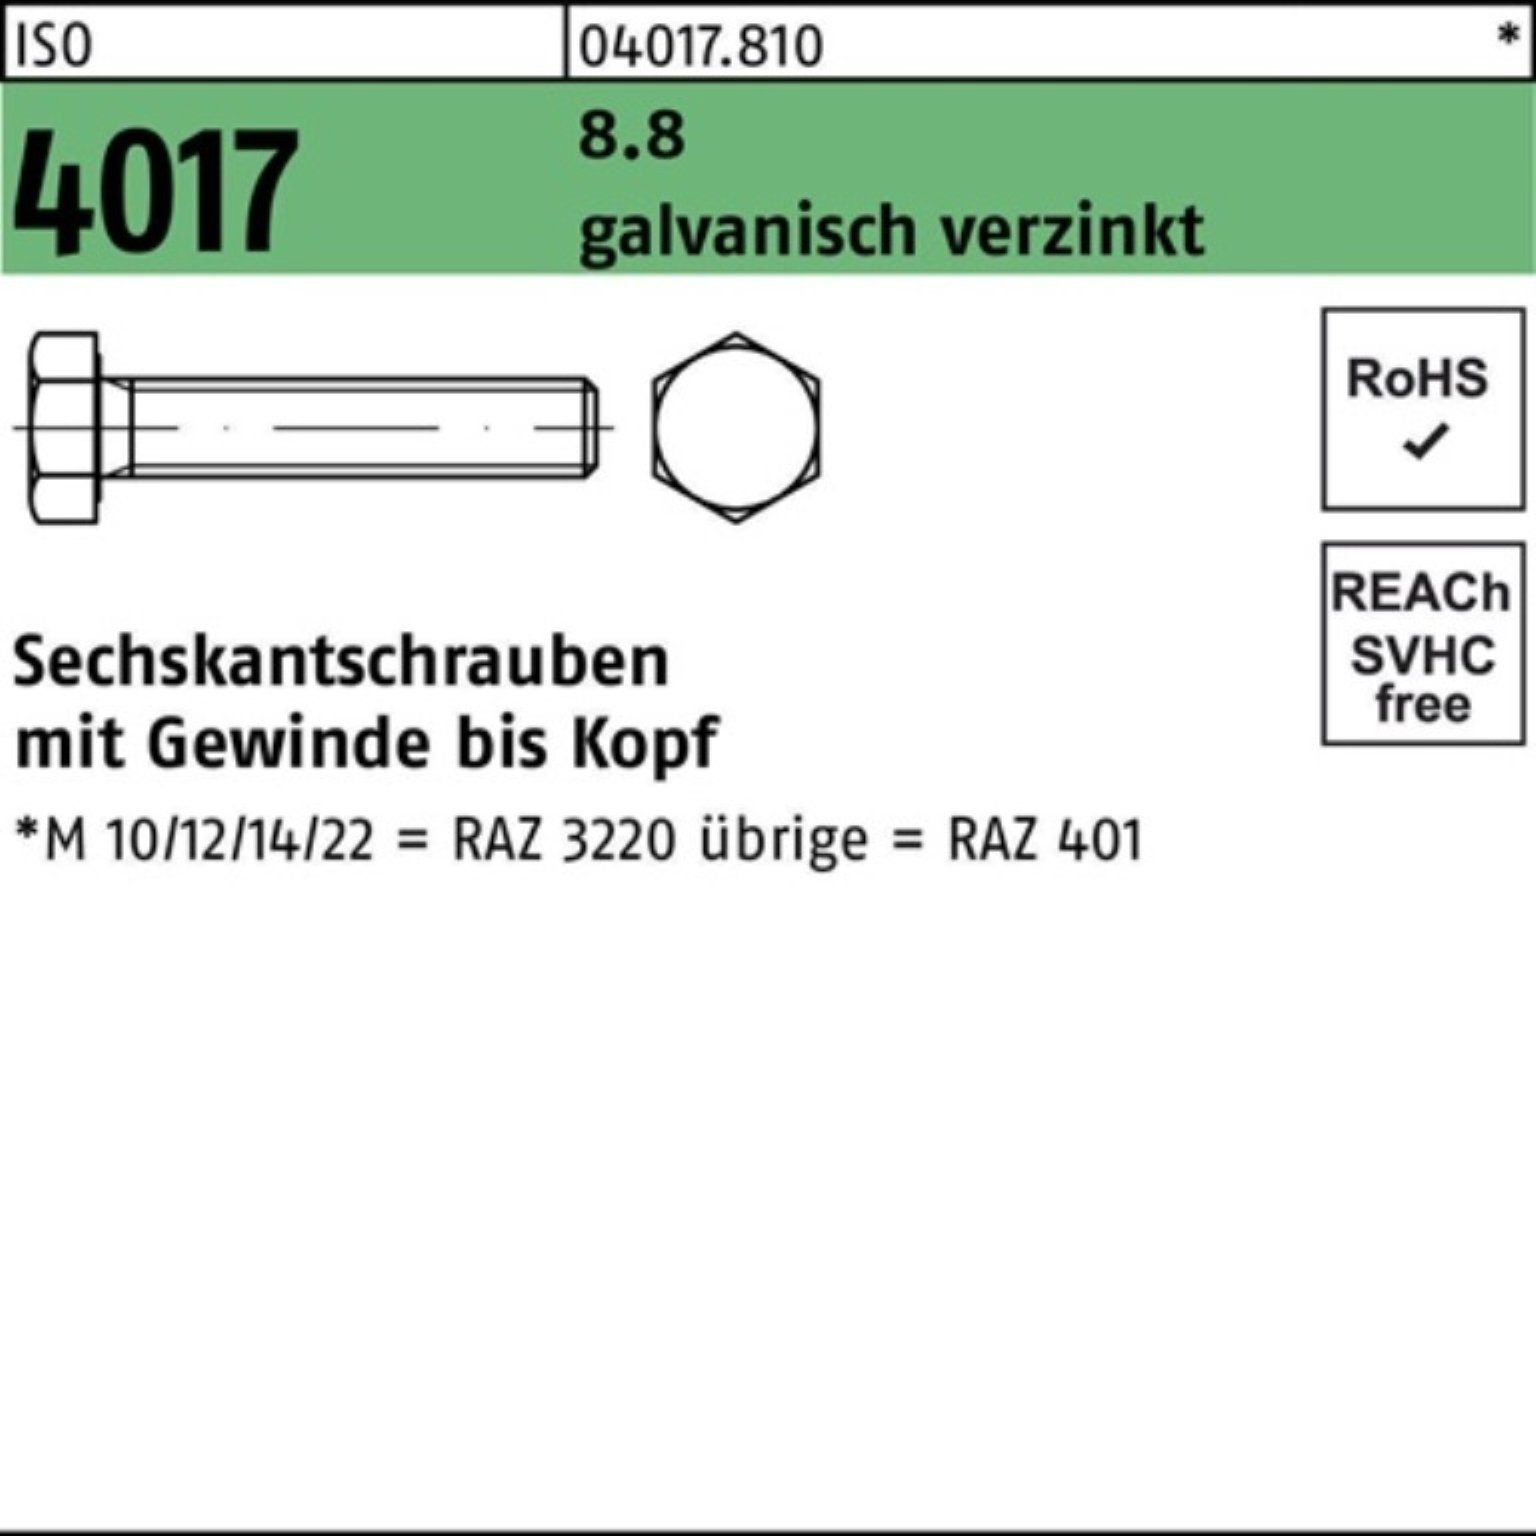 Bufab Sechskantschraube 100er Pack galv.verz. 4017 S 100 Sechskantschraube VG 8.8 M12x ISO 150